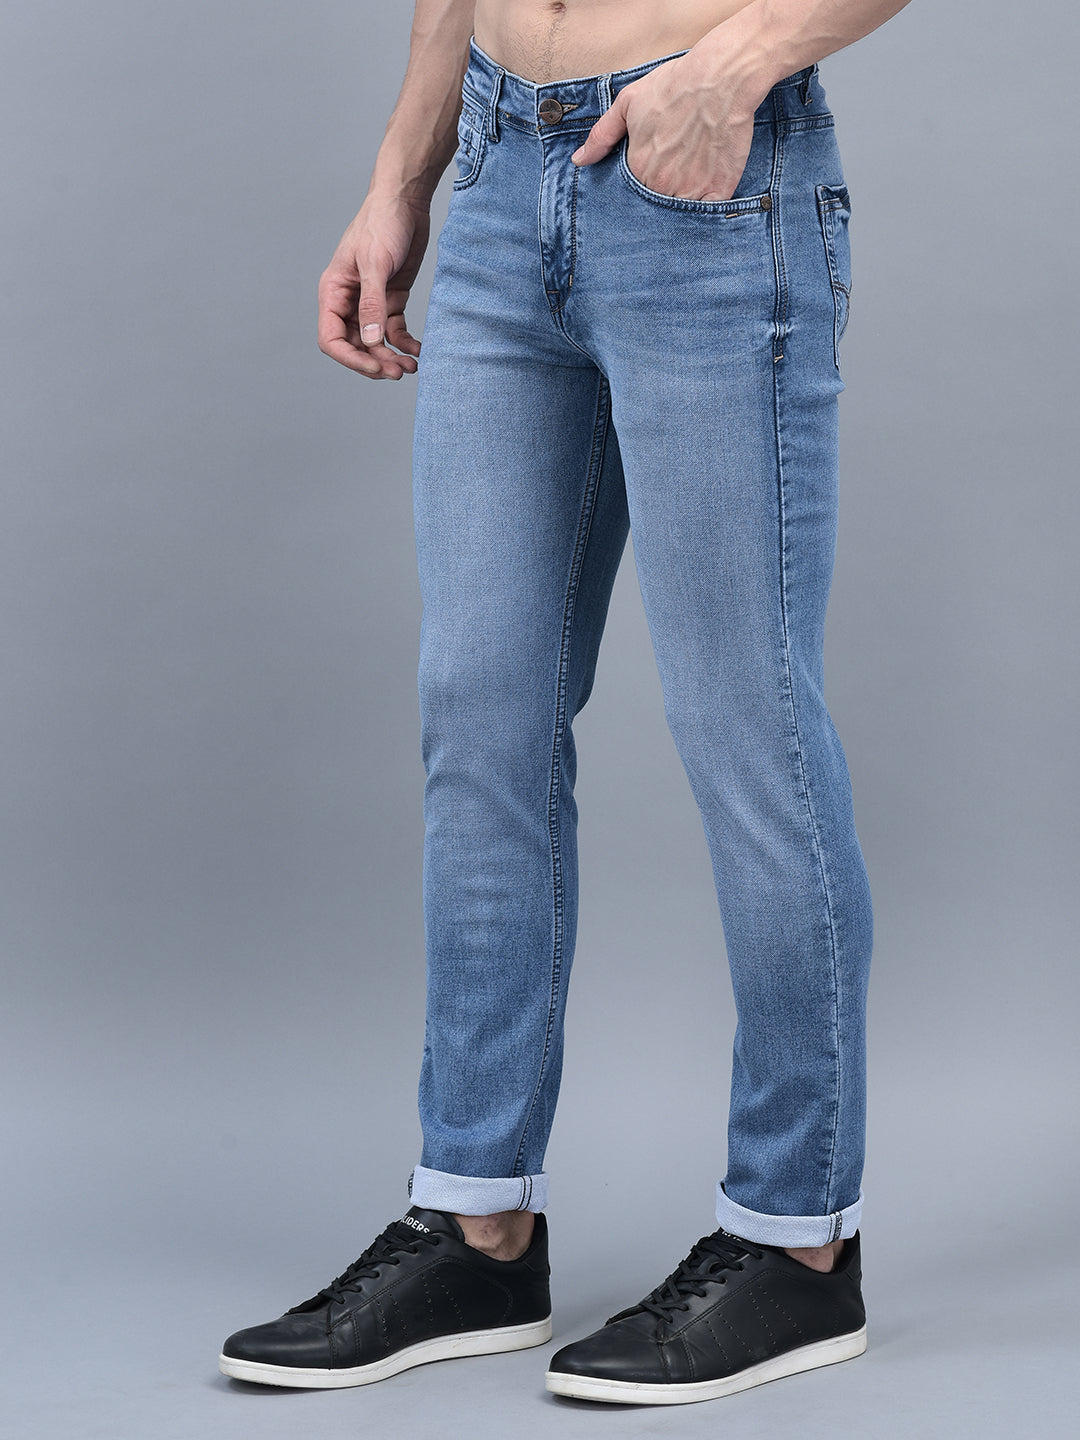 Cobb Light Blue Narrow Fit Jeans